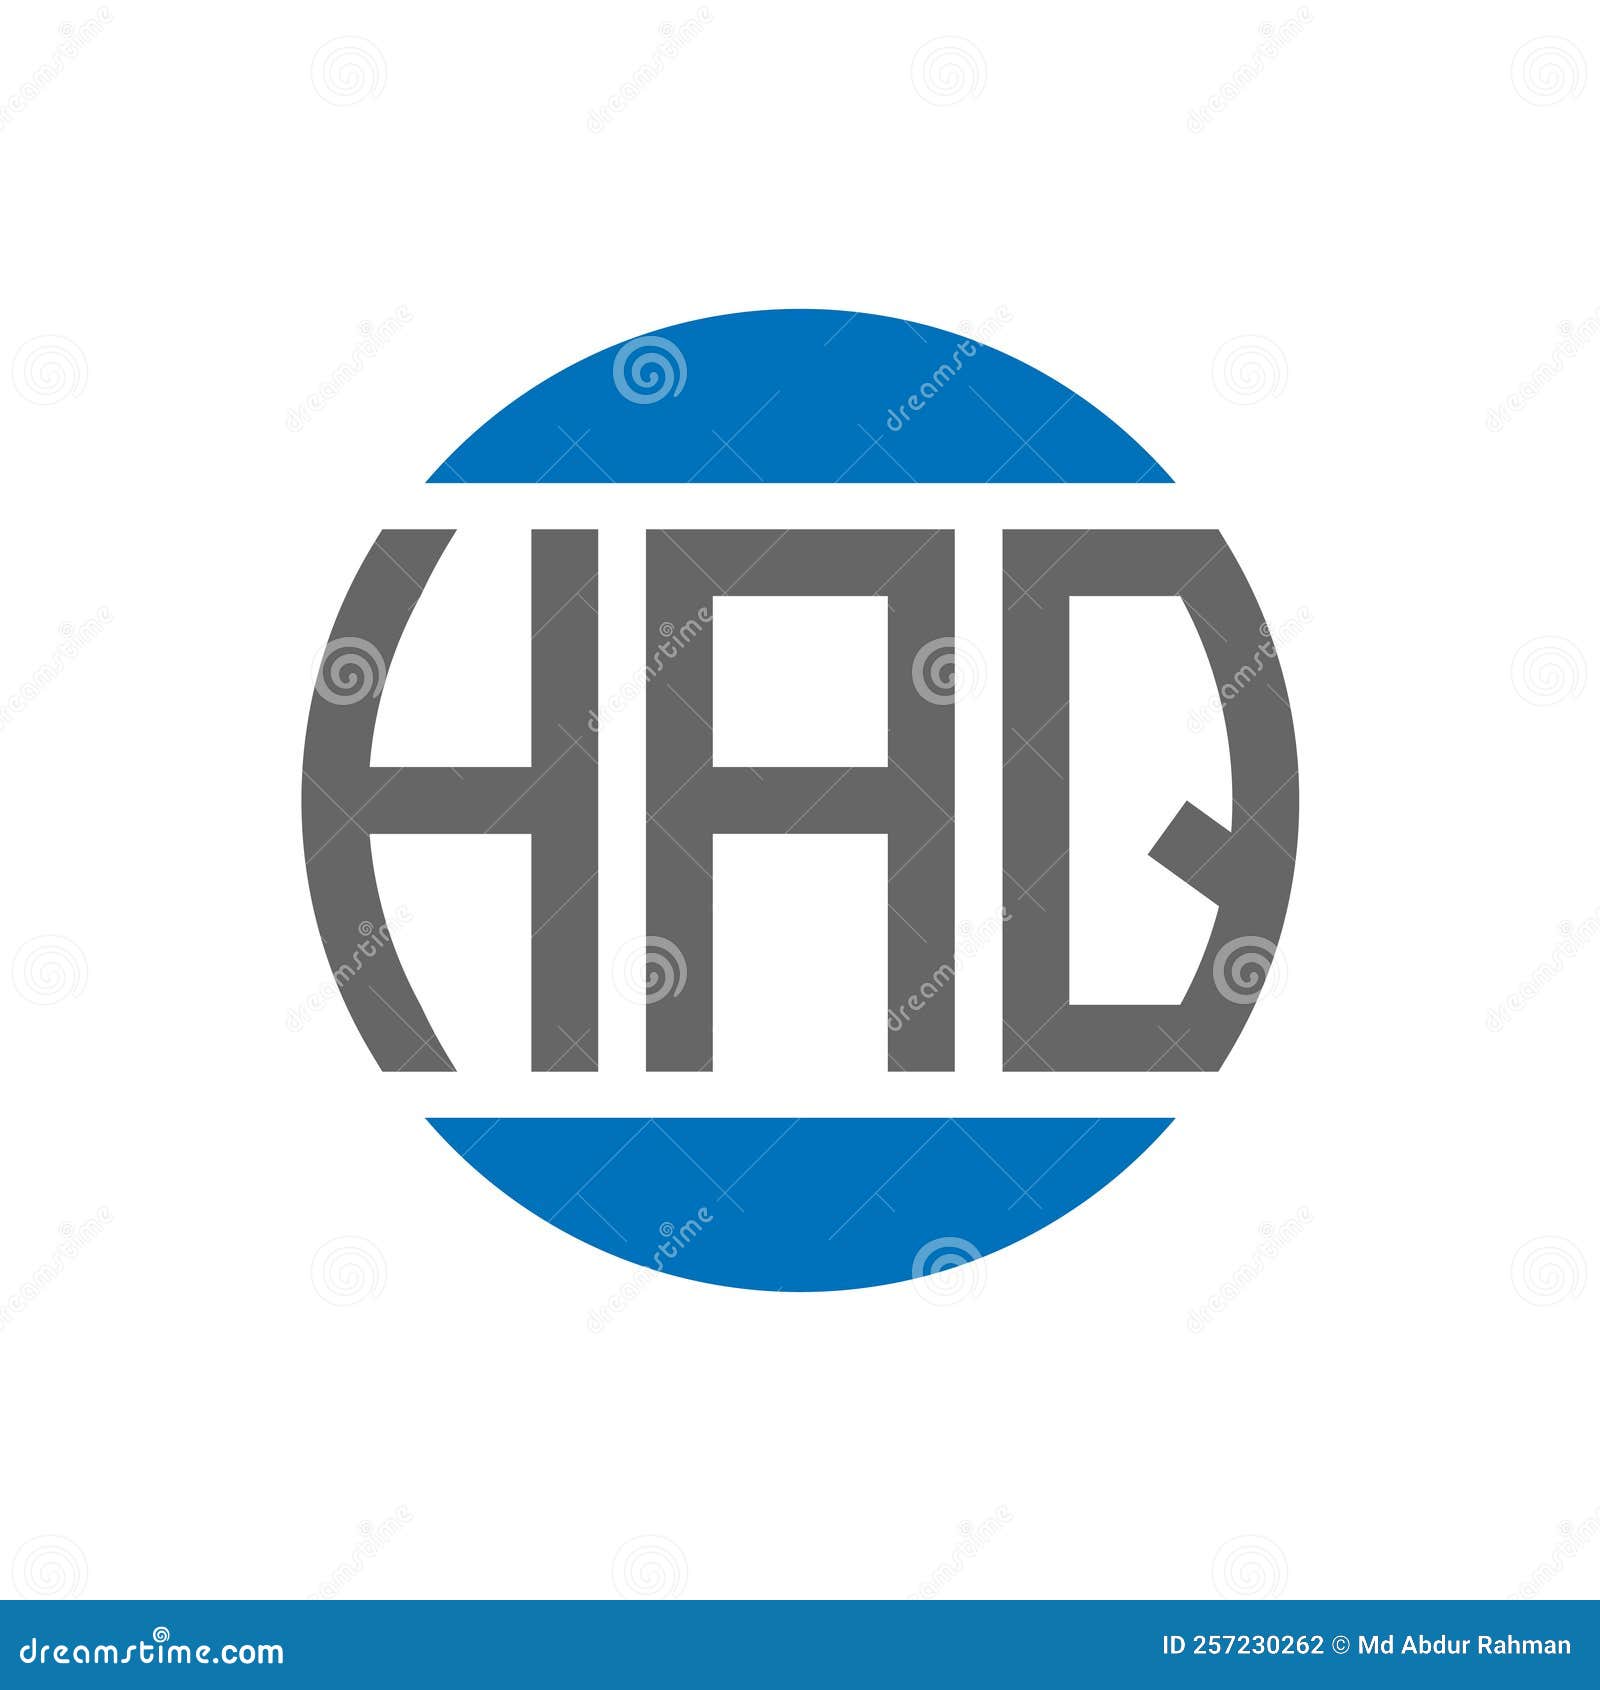 haq letter logo  on white background. haq creative initials circle logo concept. haq letter 